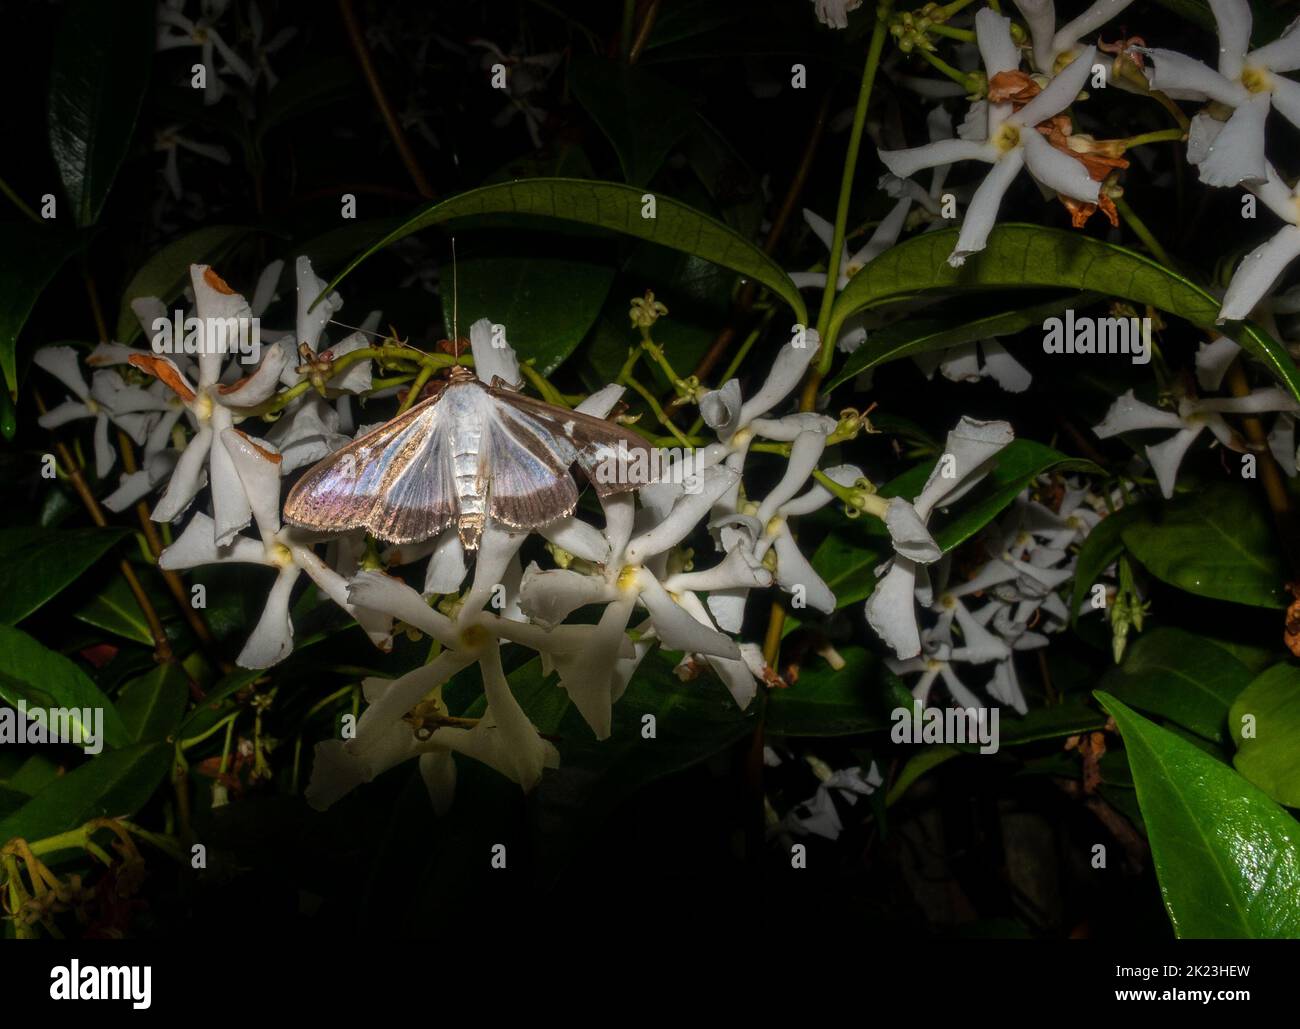 Invasive species Box Tree Moth (Cydalima perspectalis) feeding on star jasmine flowers (Trachelospermum jasminoides) at night, West Yorkshire, England Stock Photo